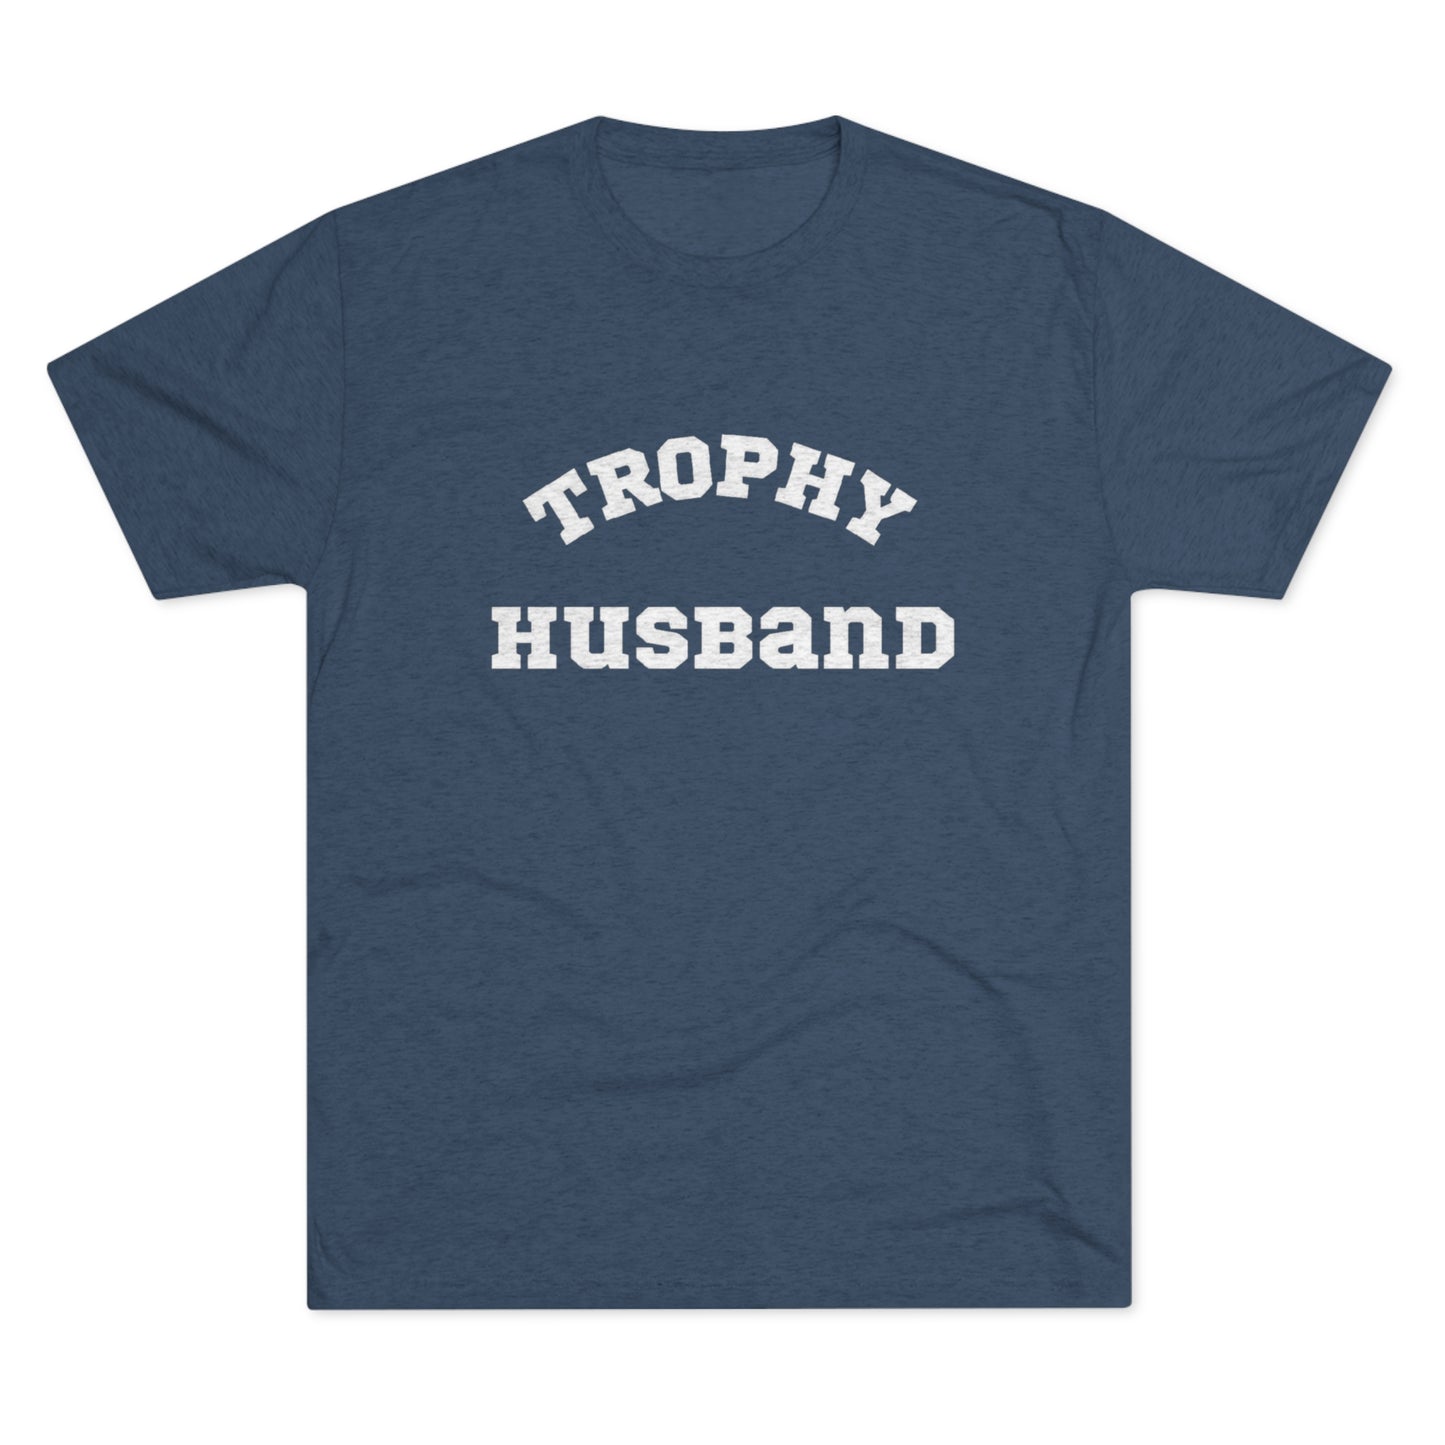 Trophy Husband Crew Tee